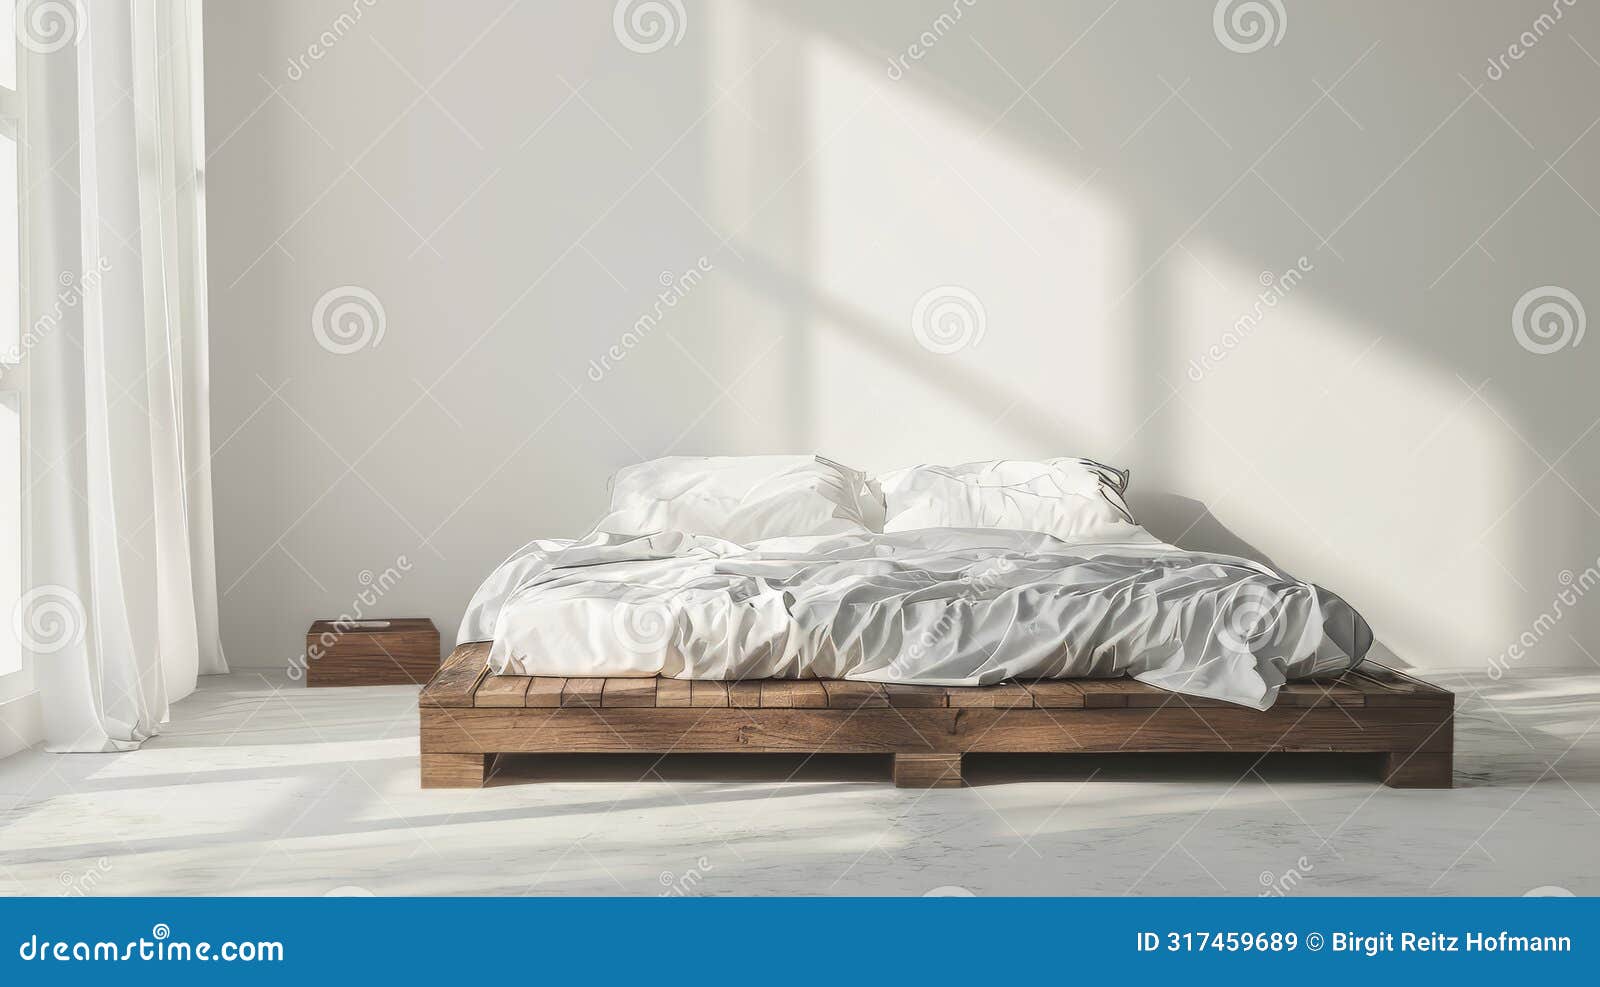 minimalistic bedroom with futon